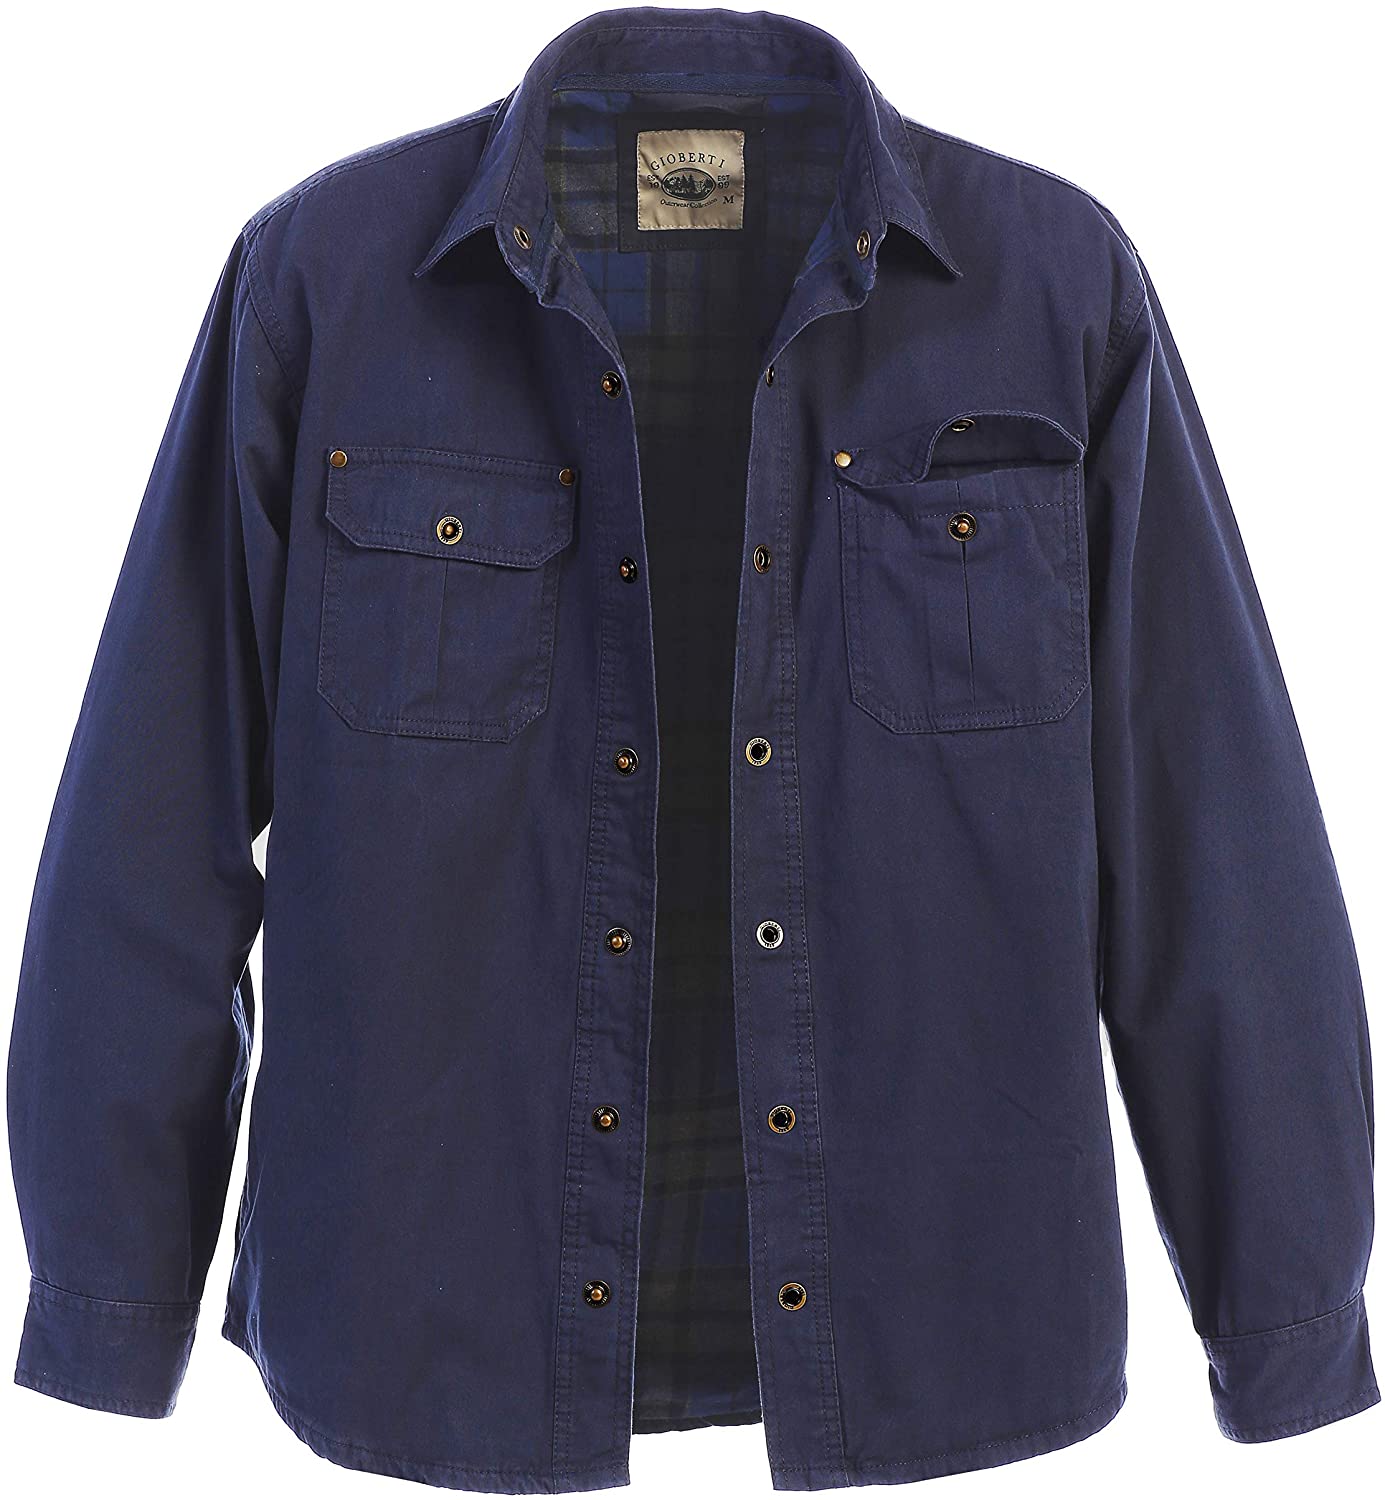 Gioberti Men's 100% Cotton Sportwear Full Zipper Twill Bomber Jacket